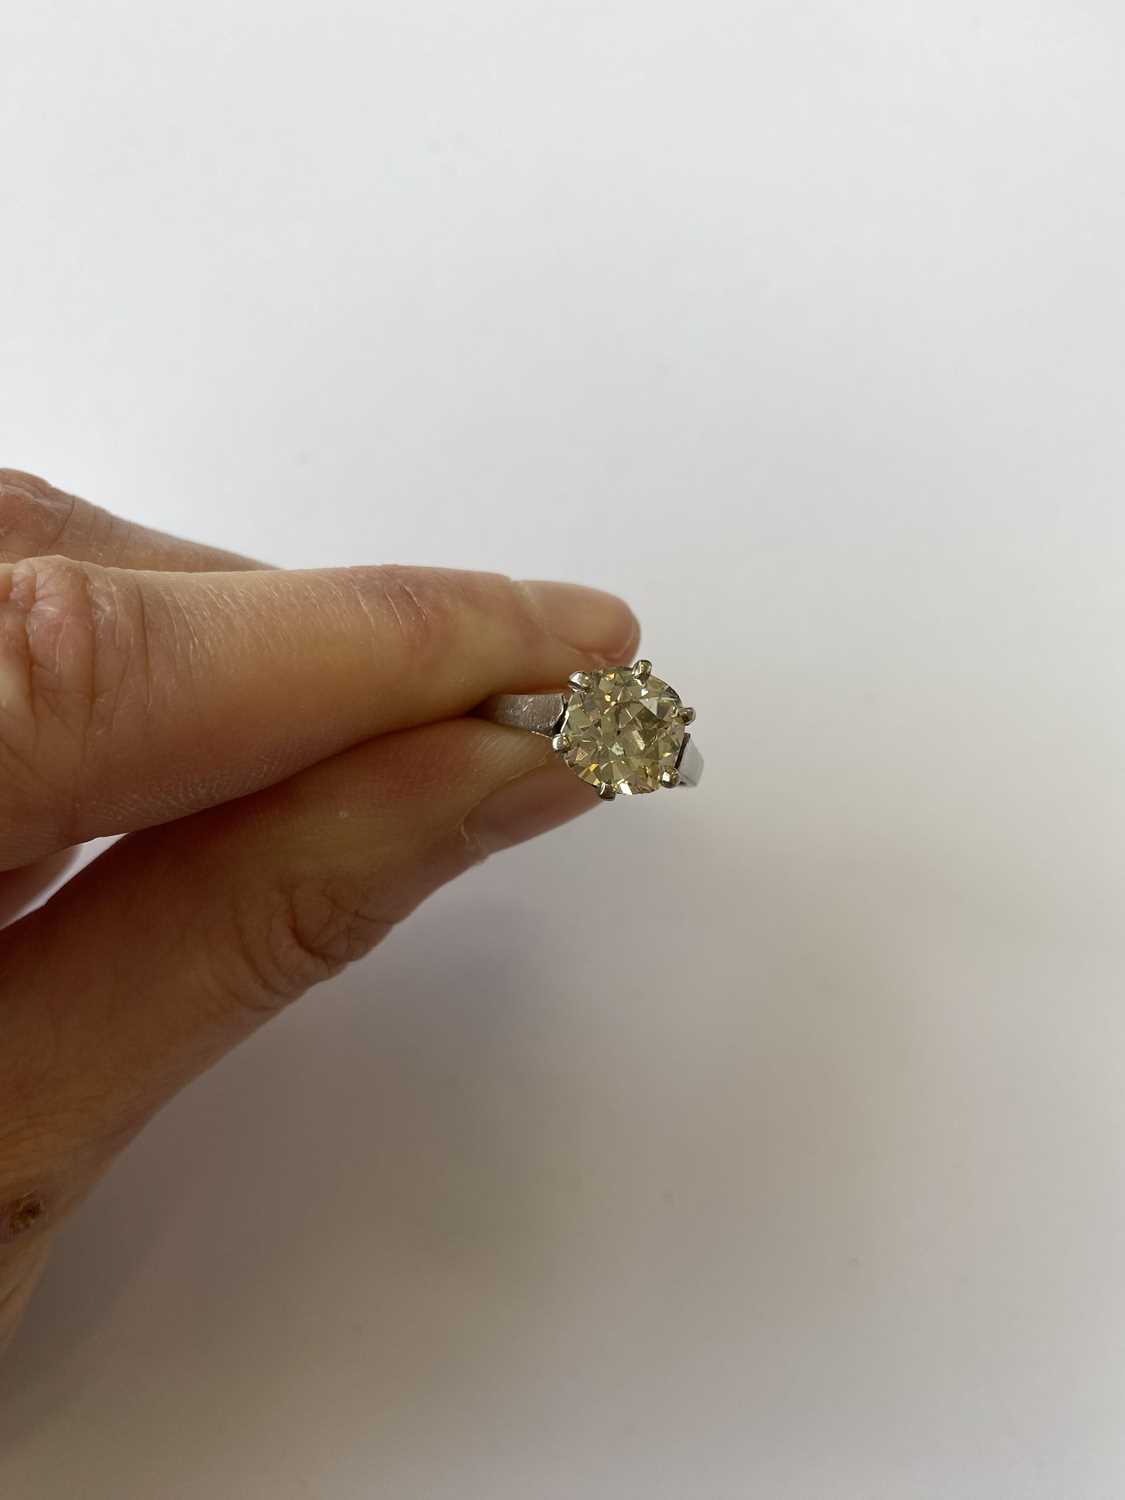 An early 20th century single stone diamond ring - Image 8 of 14